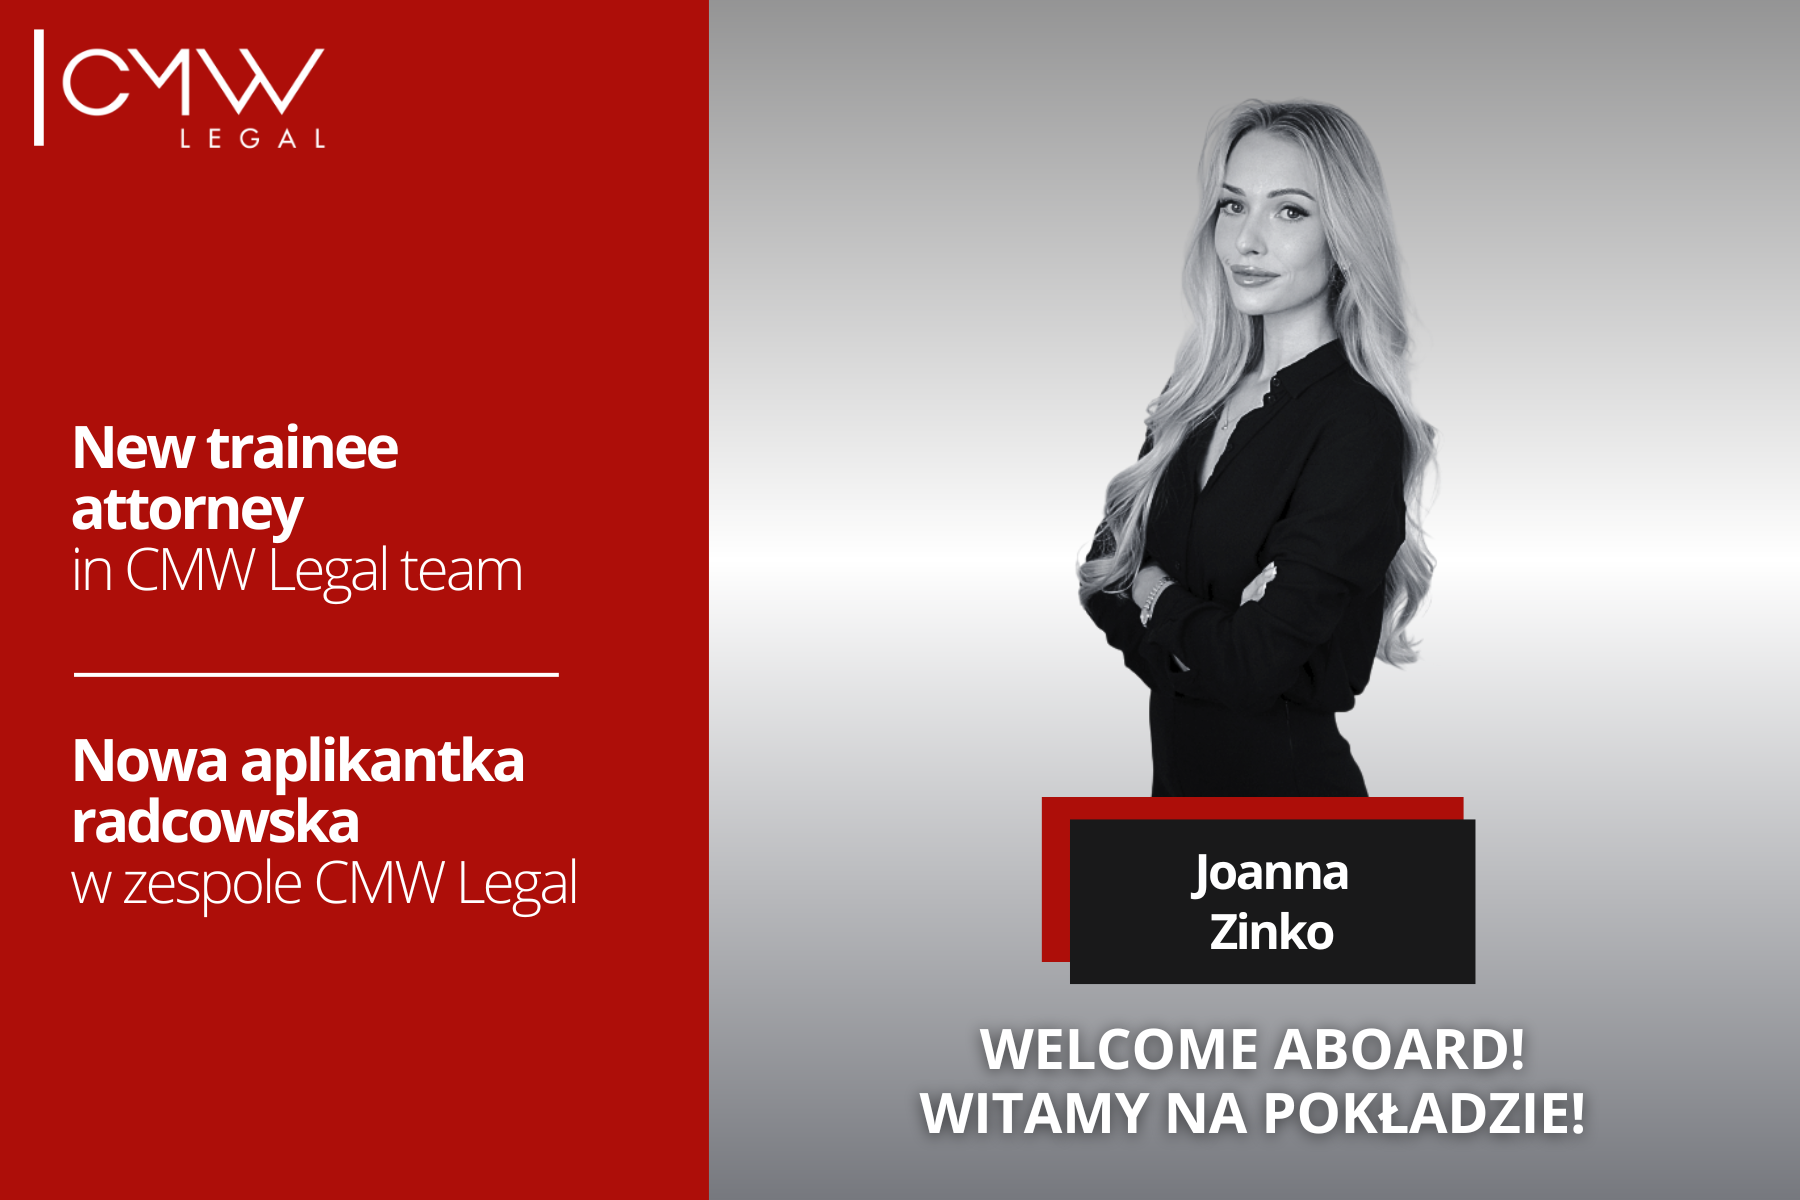  Joanna Zinko has joined CMW Legal team in Szczecin